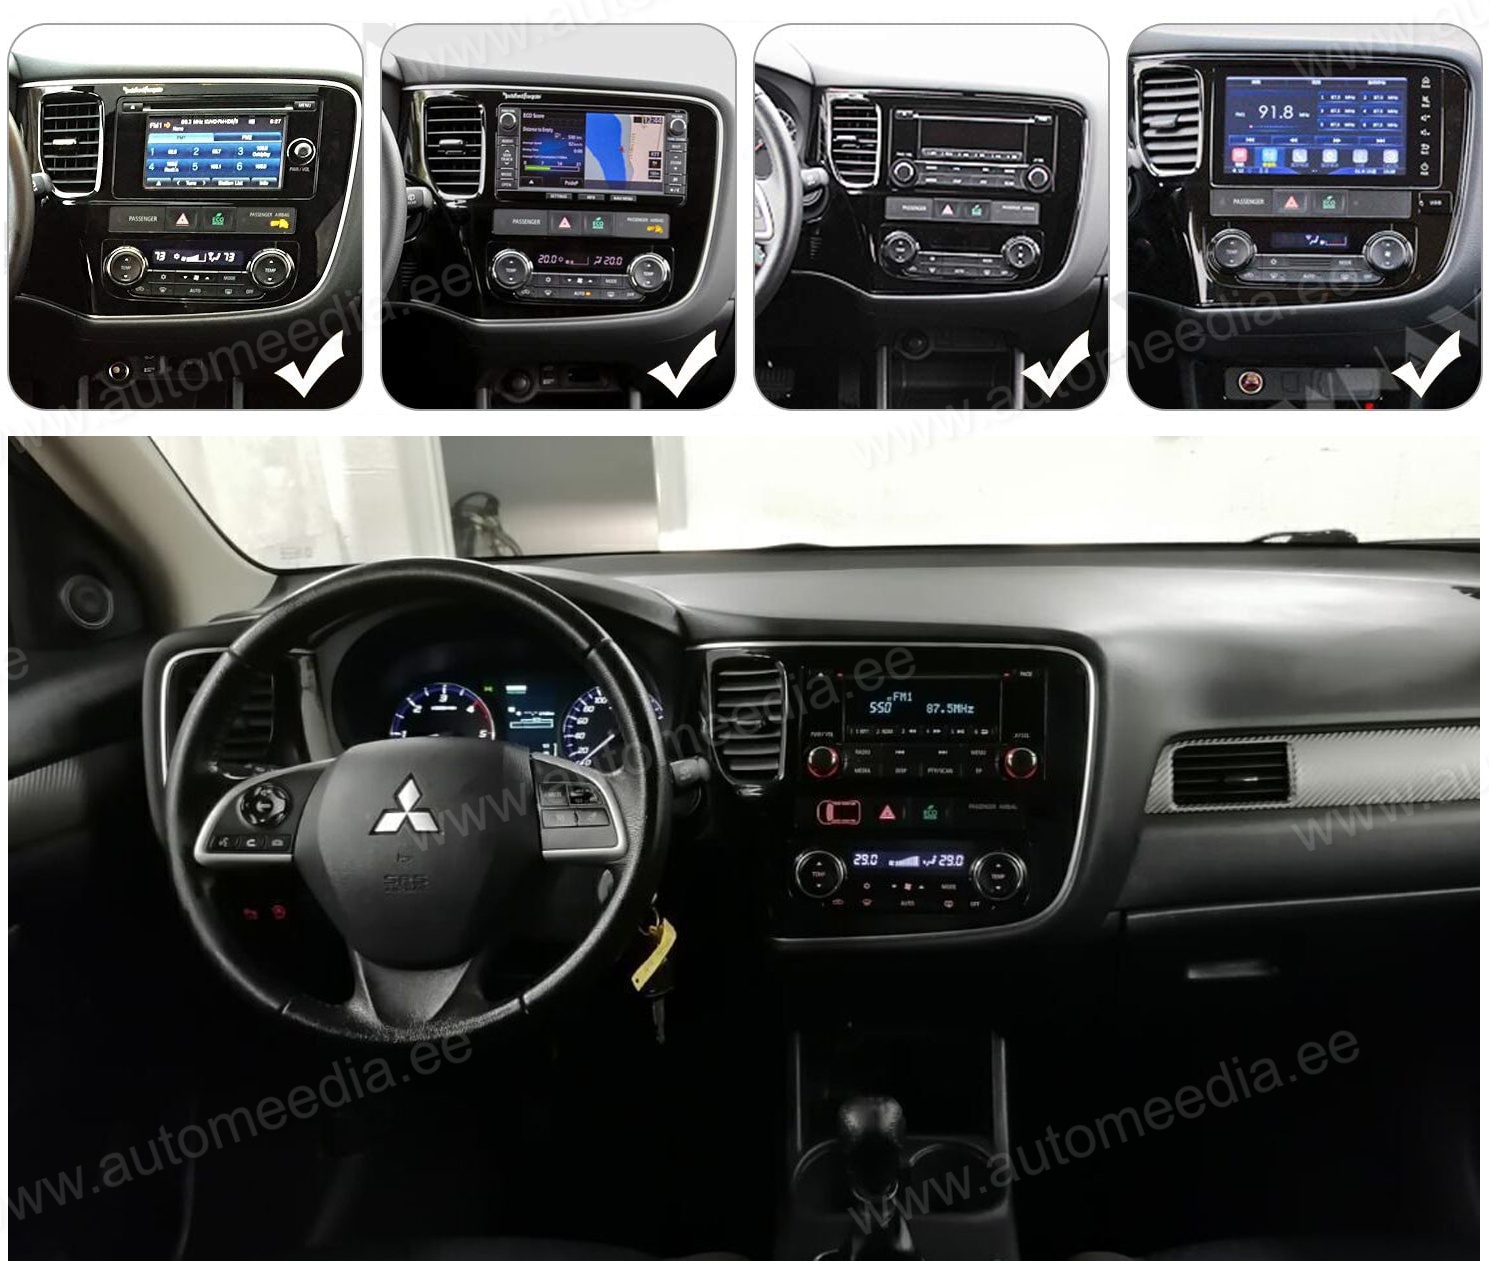 MITSUBISHI OUTLANDER XL (2012->) /LANCER-X (2013->) /ASX (2013->)  Automedia RVT5557 Automedia RVT5557 custom fit multimedia radio suitability for the car